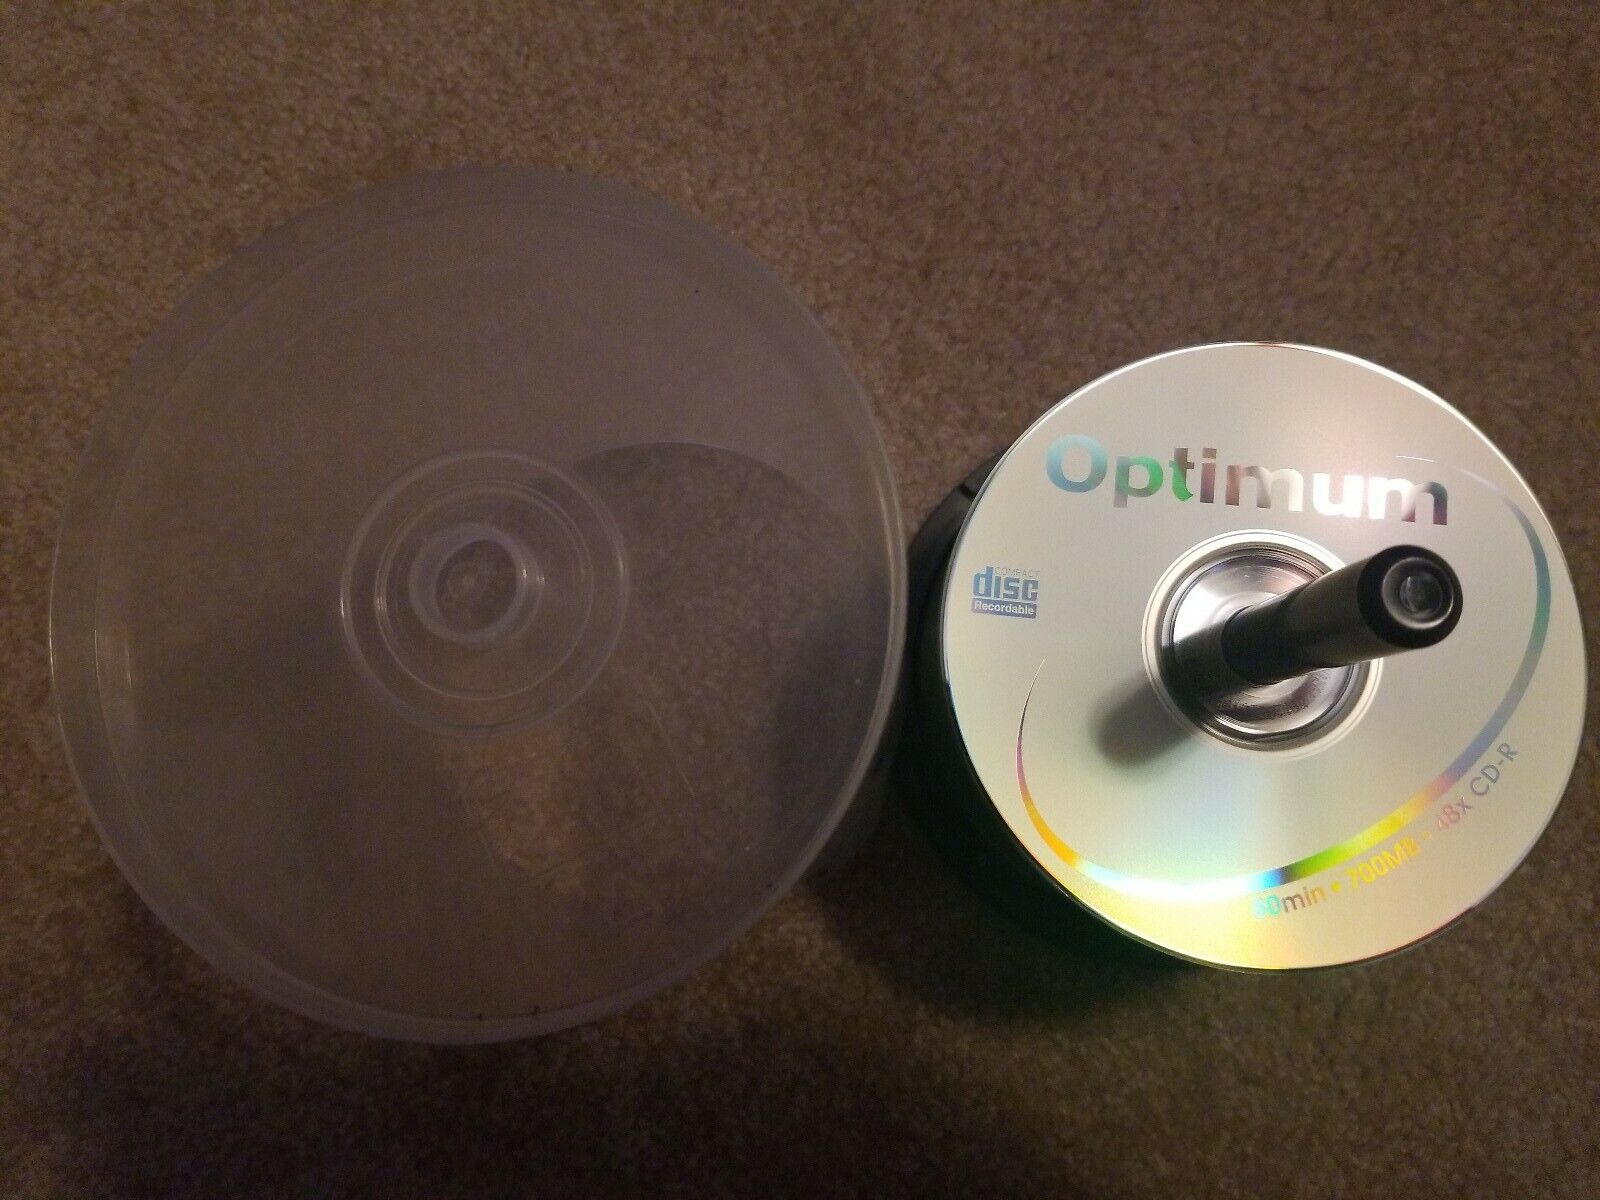 59 Pack Optimum 48x*80min*700mb CD-R Discs (Open Case) 